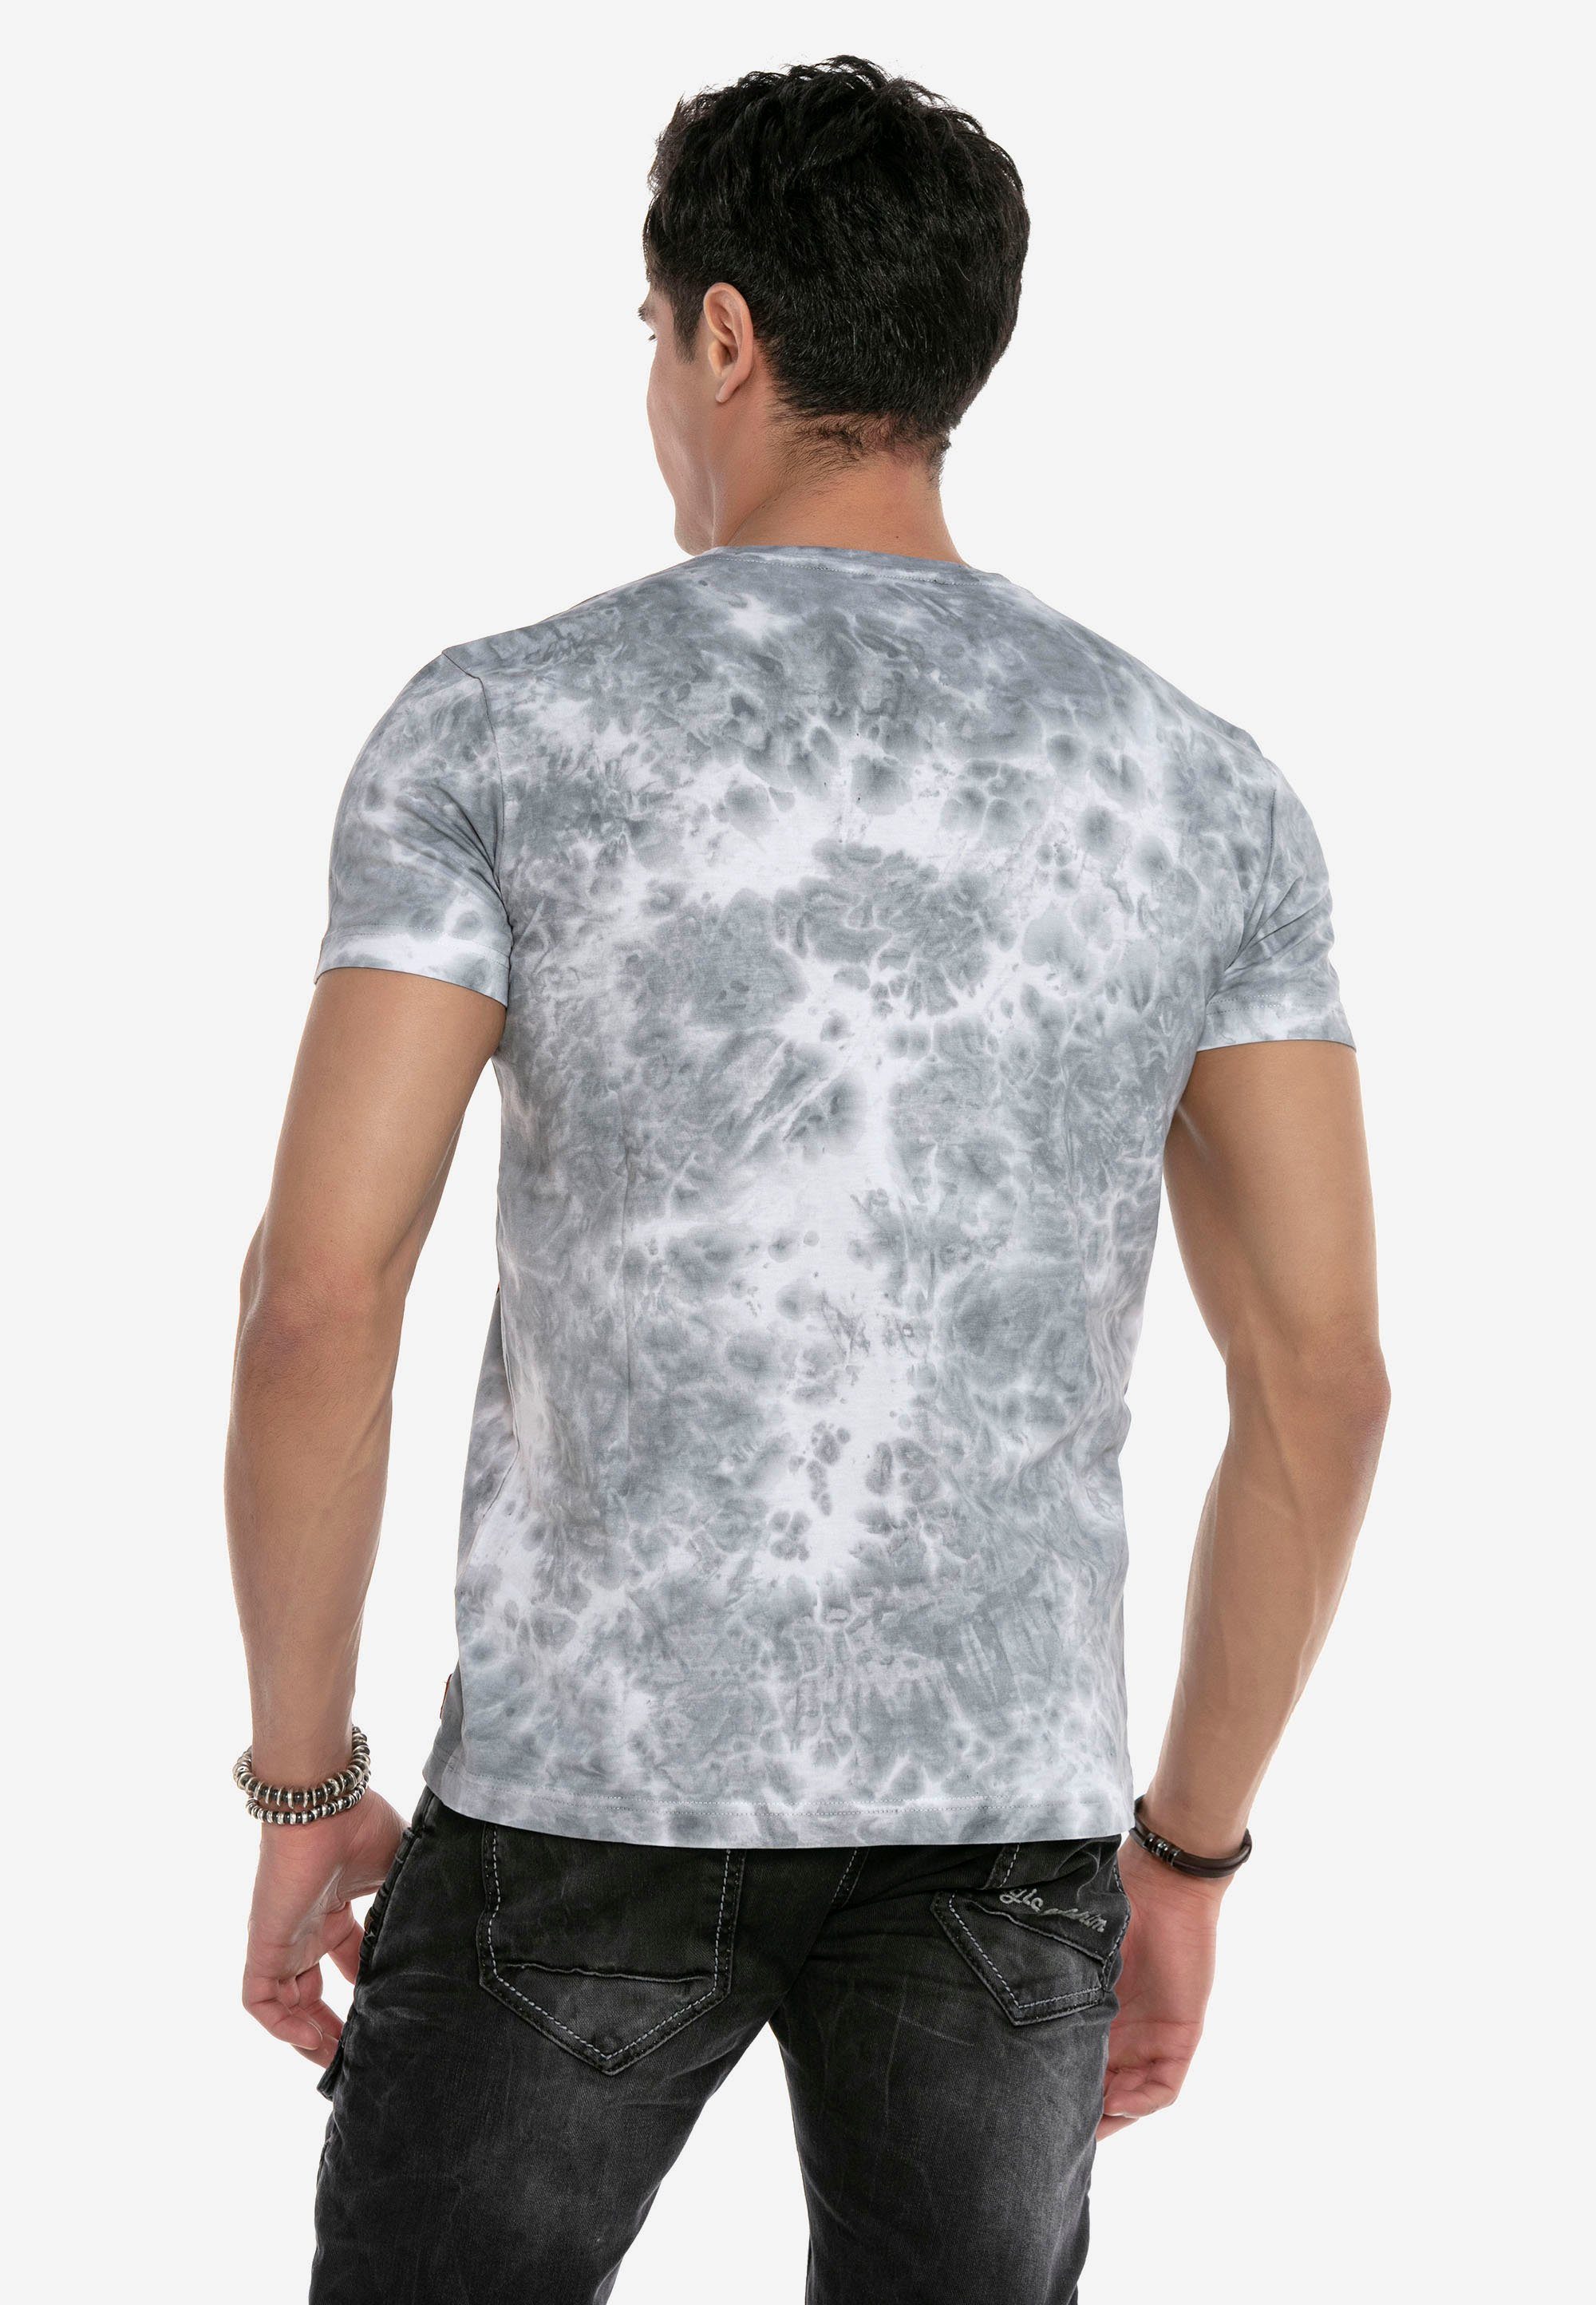 Aufdruck Cipo mit Baxx grau CT629 T-Shirt & coolem